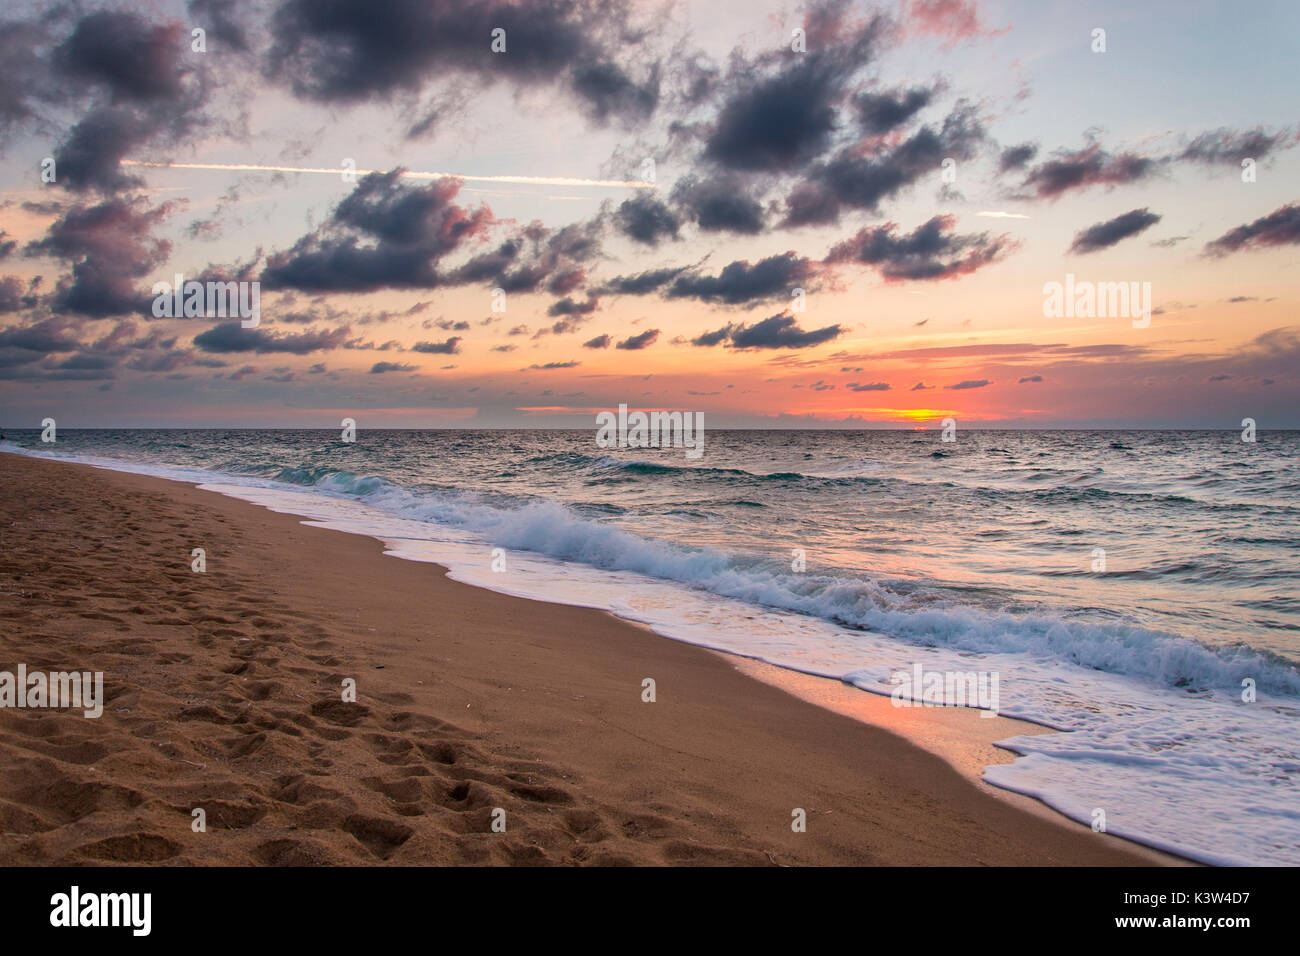 Sunset on Piscinas beach, Costa Verde, Arbus, Medio Campidano province, Sardinia, italy, europe. Stock Photo